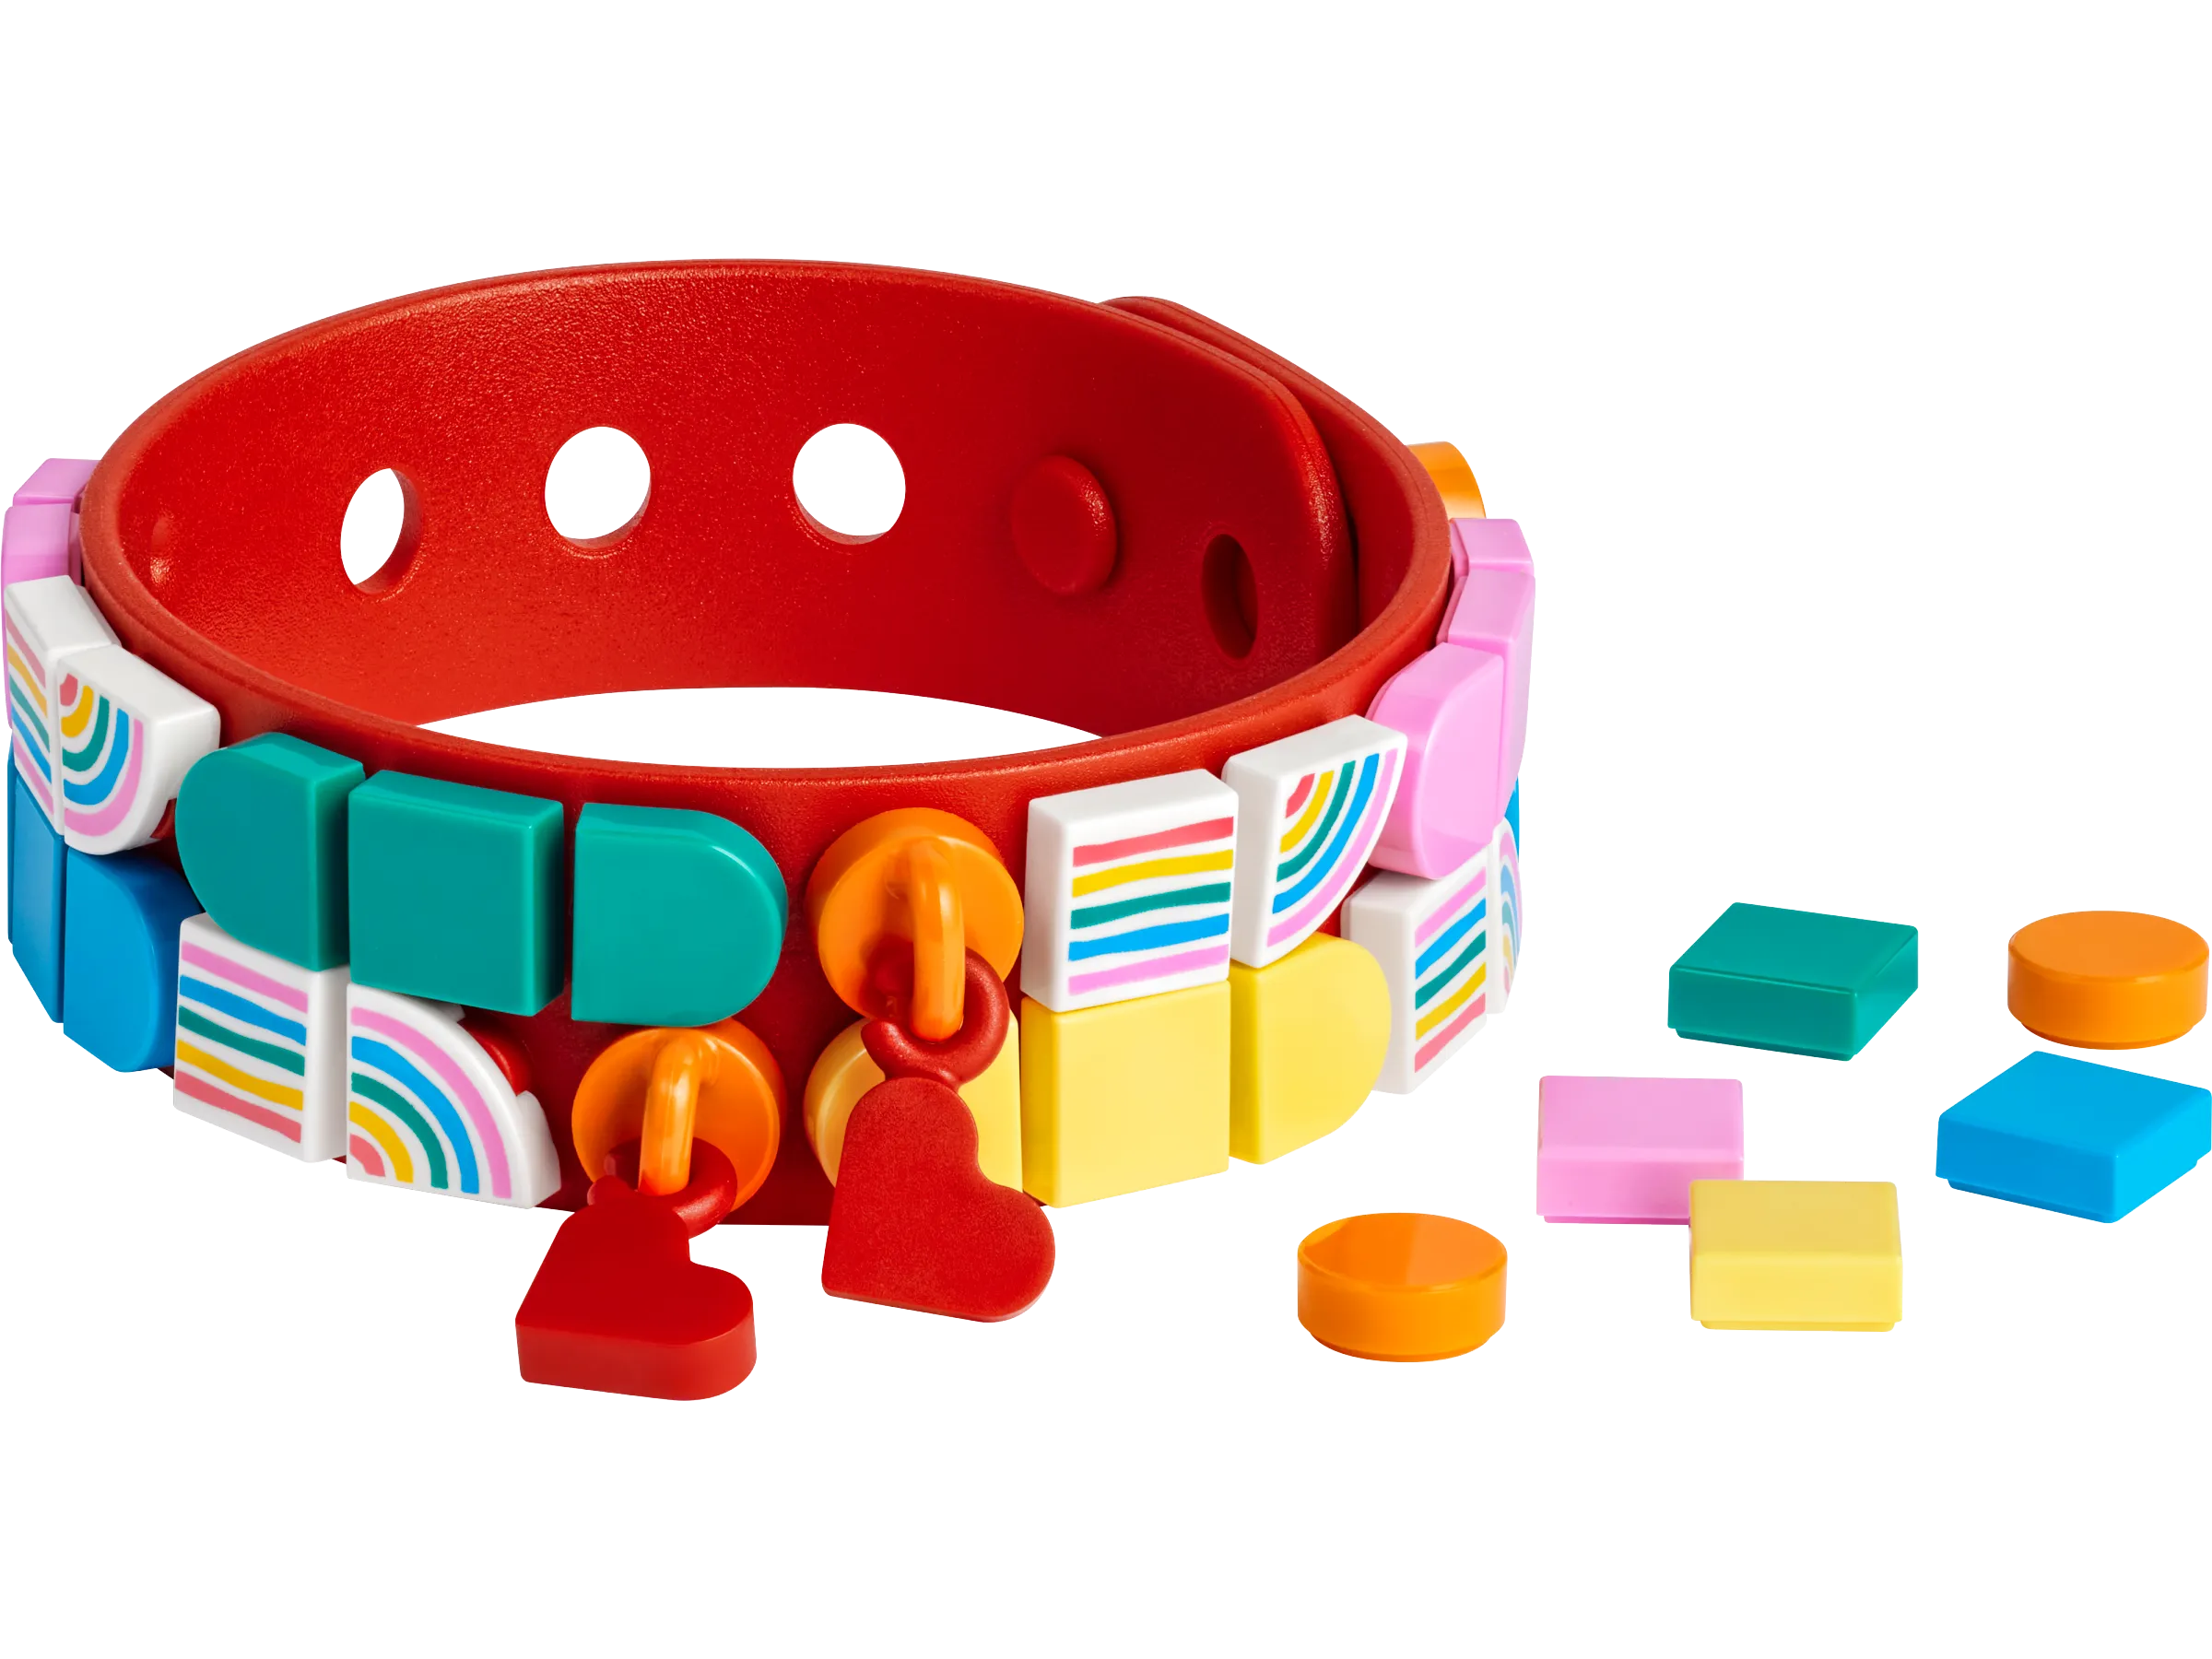 LEGO - DOTS Regenbogen Armband mit Anhängern | Set 41953